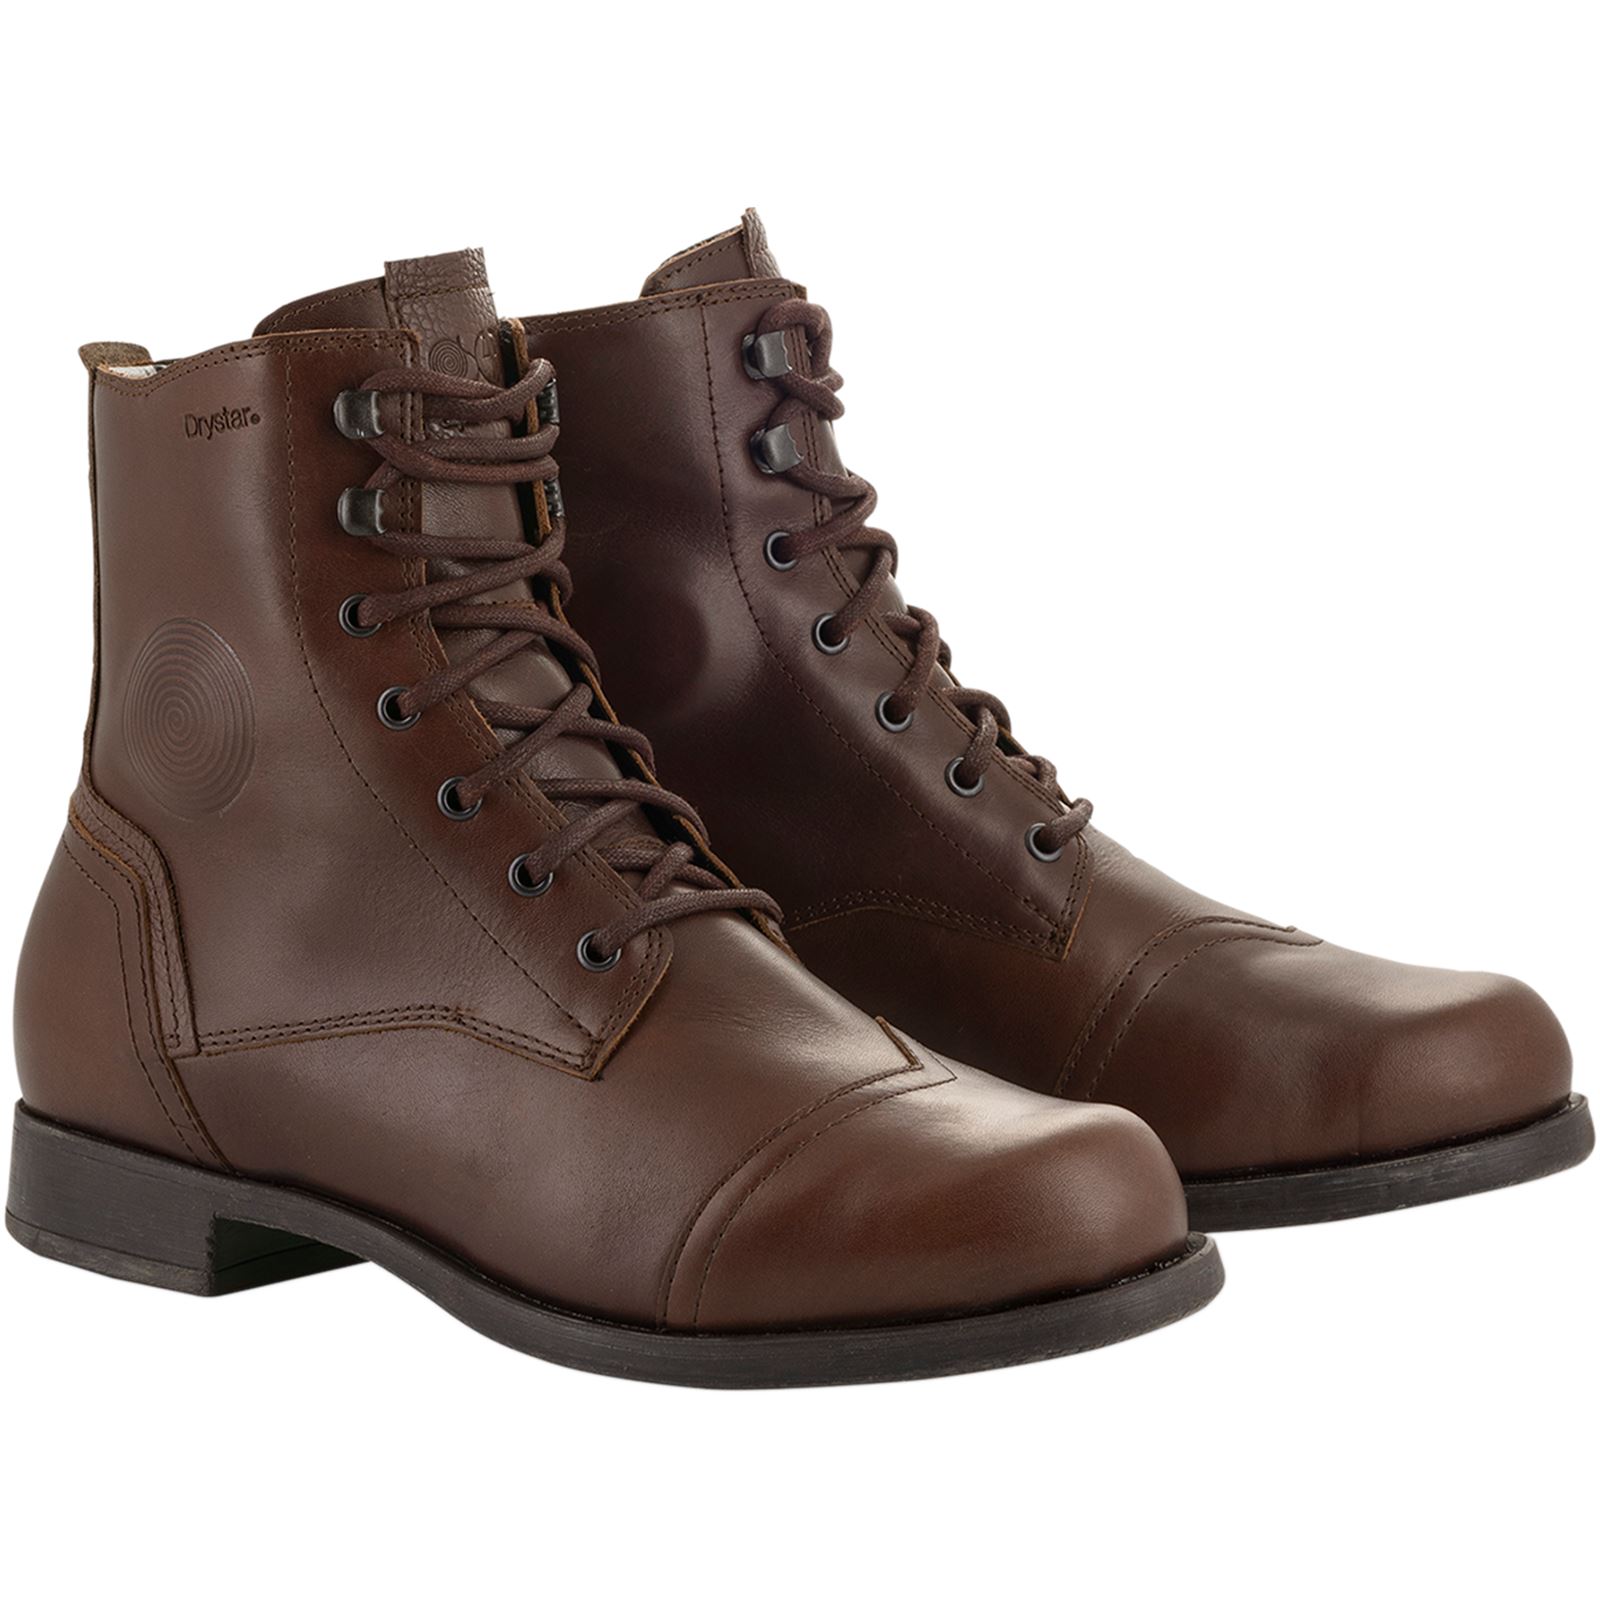 Alpinestars Distinct Boots - Brown - Size 7